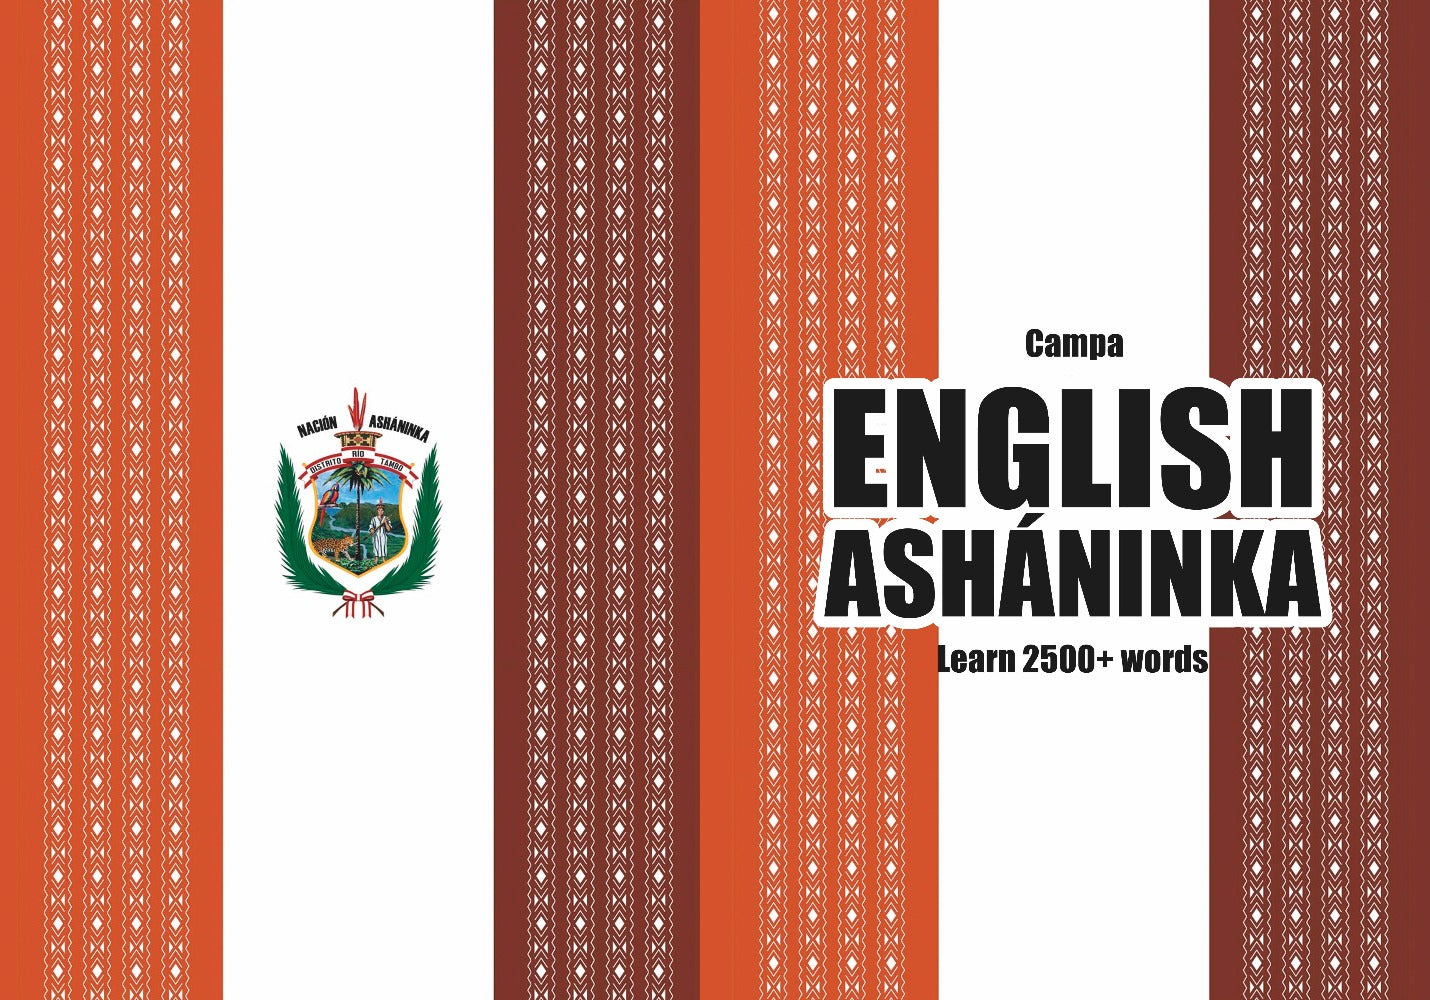 Ashaninka language learning notebook cover